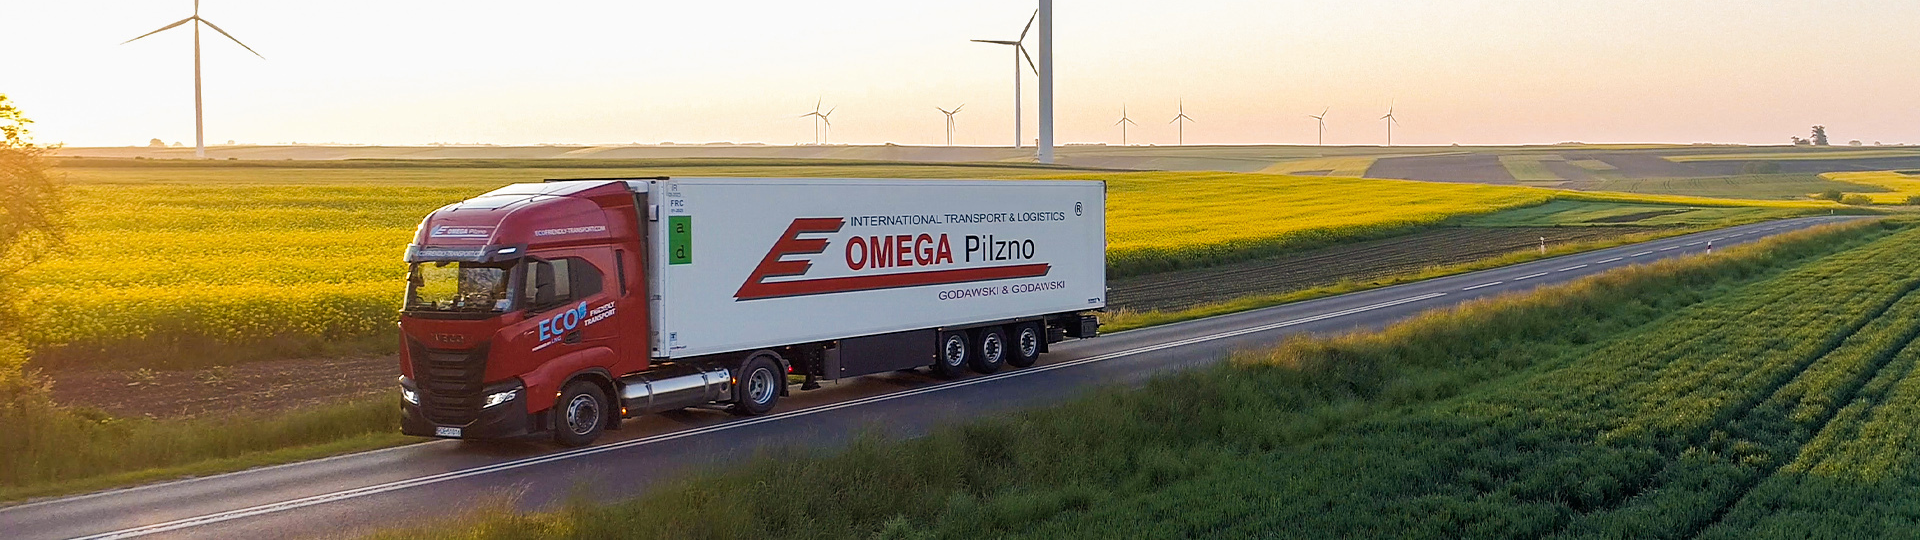 Eco-friendly transport ekologiczny OMEGA Pilzno